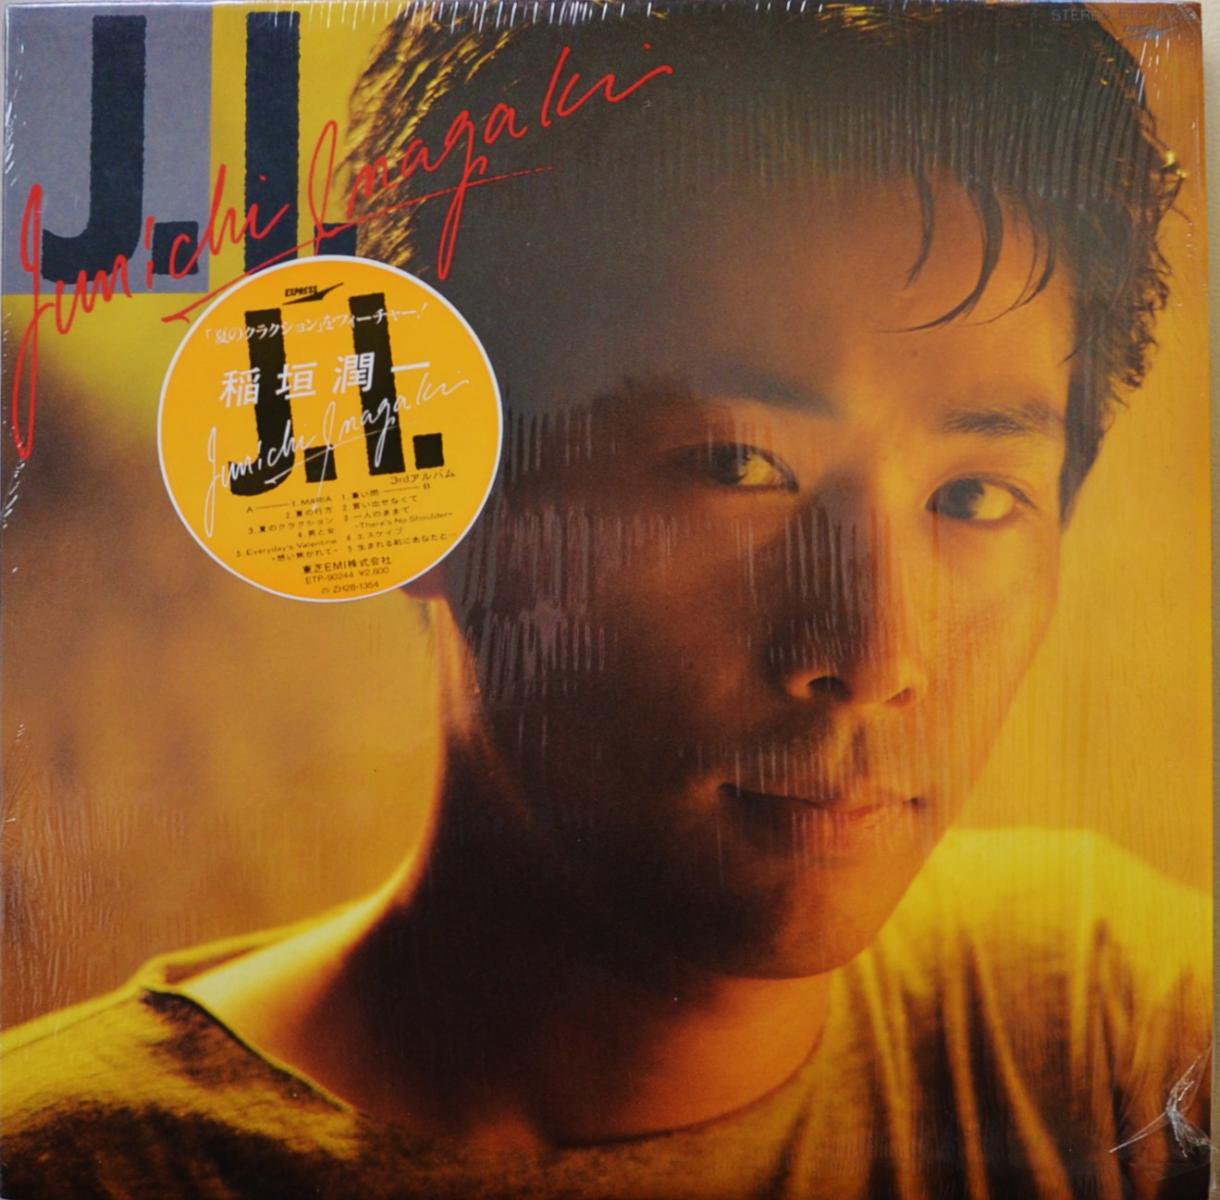 稲垣潤一 JUNICHI INAGAKI / J.I. (LP) - HIP TANK RECORDS